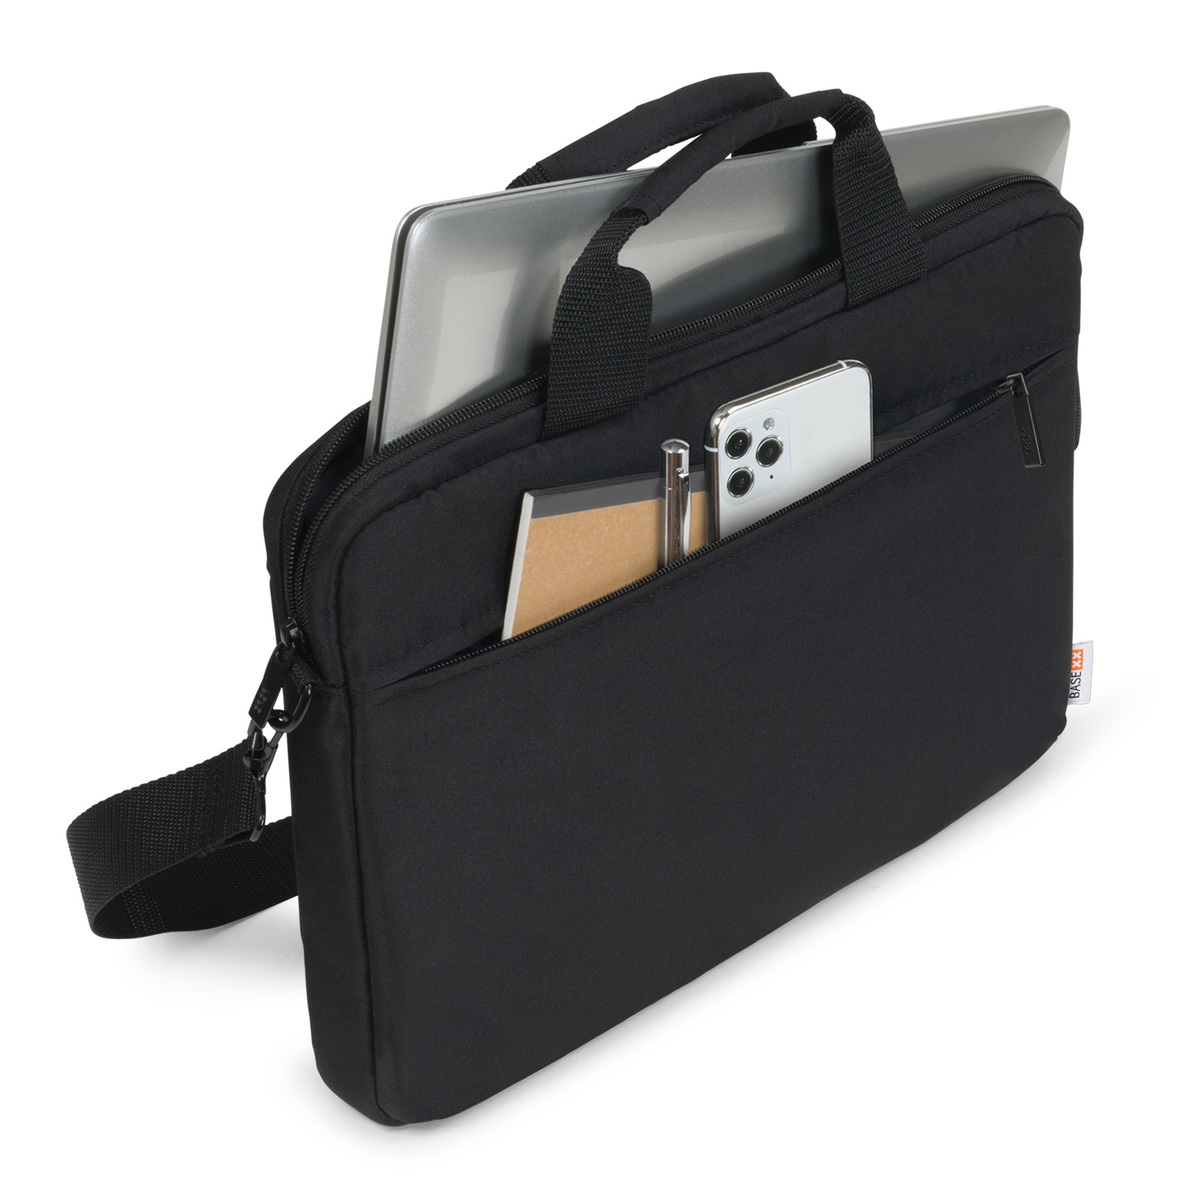 Dicota Base xx Laptop Slim Case, 15.6 inches, Black, D31801